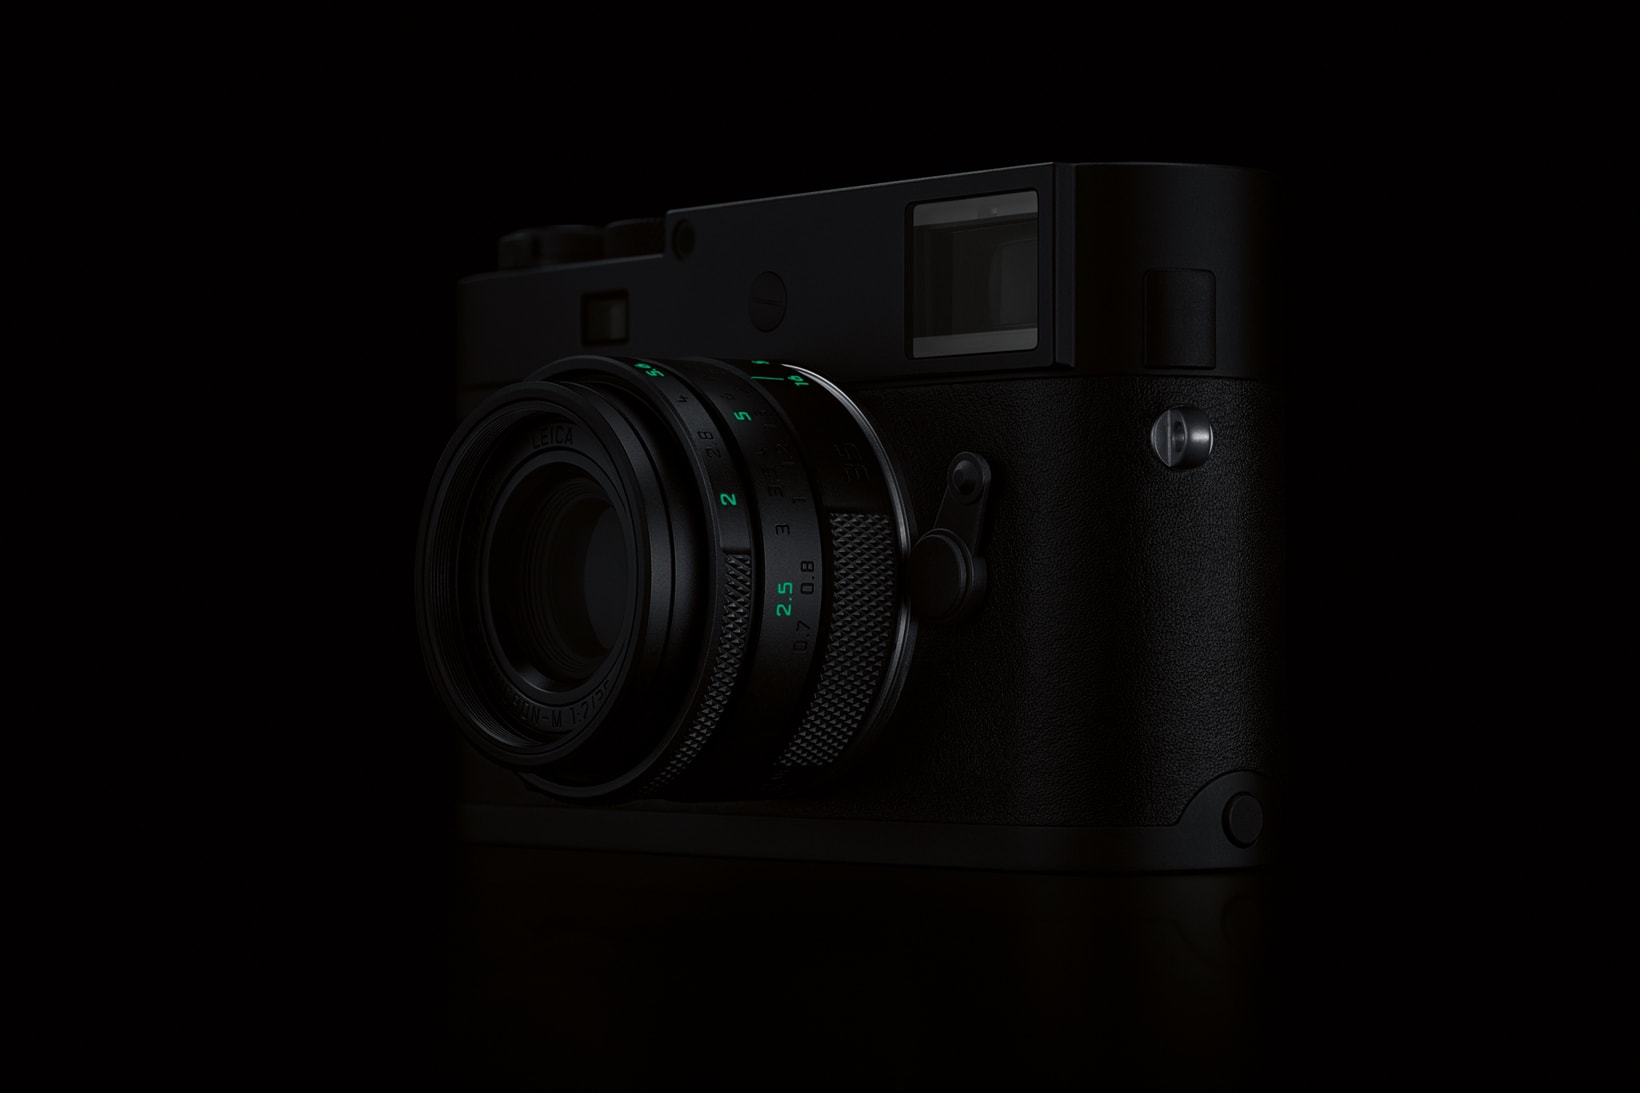 Leica Stealth Edition M Monochrom Camera 15750 usd 125 glow in the dark exclusive limited rag bone marcus wainwright matte black green